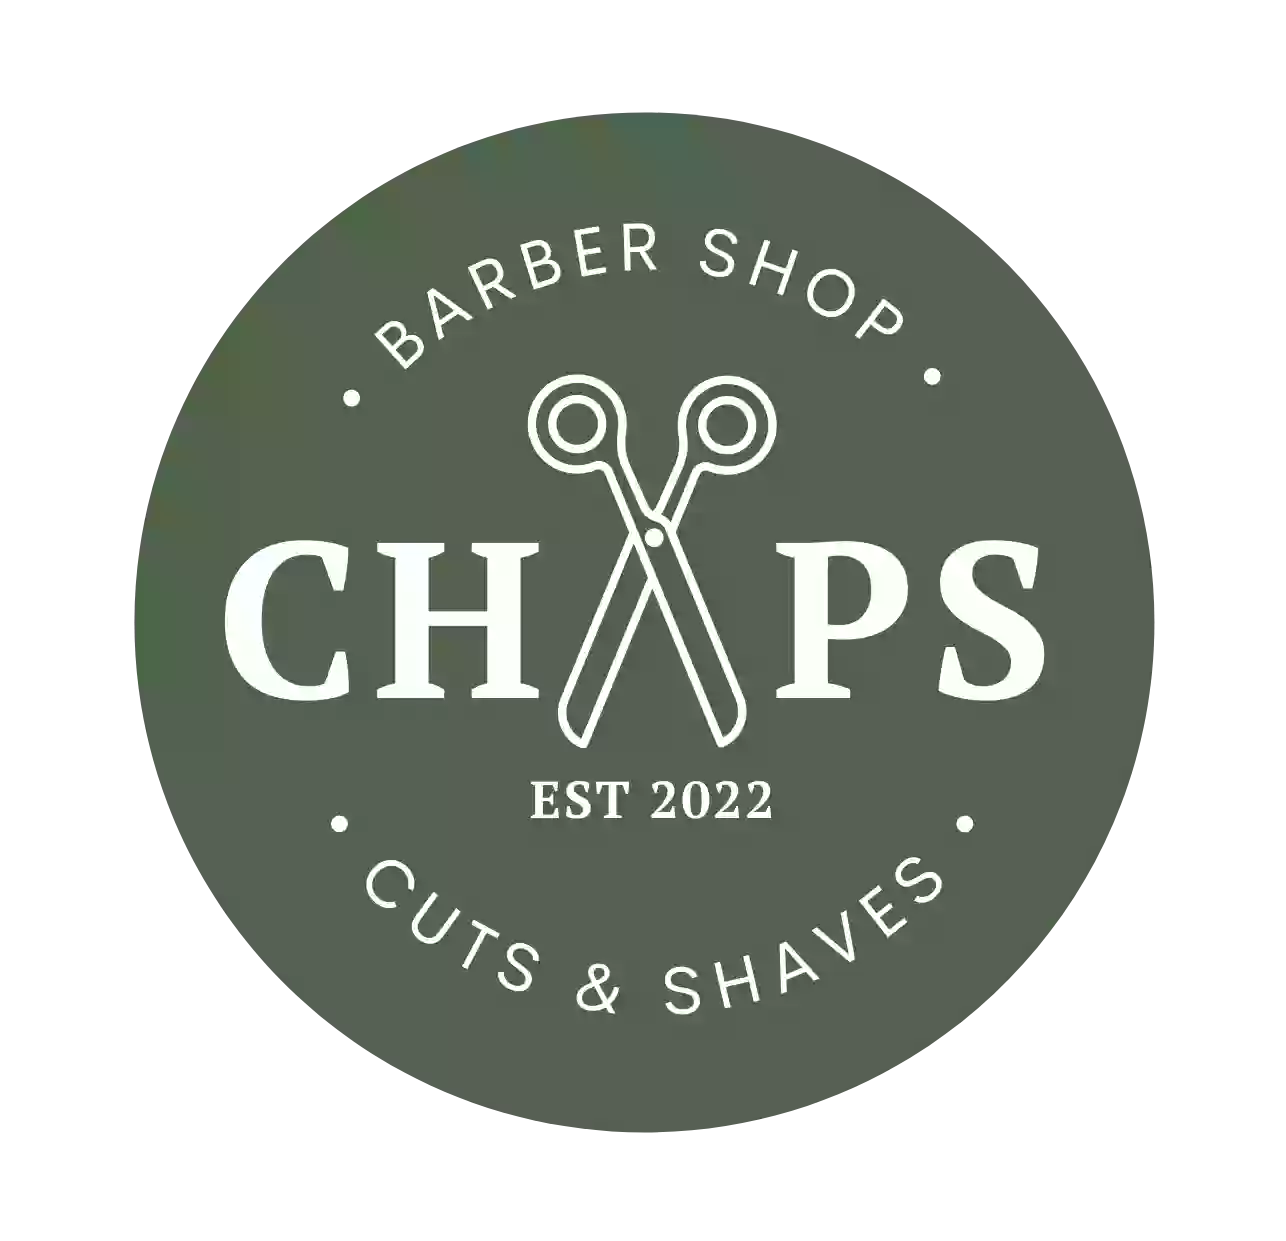 Chaps Barbershop West Lakes